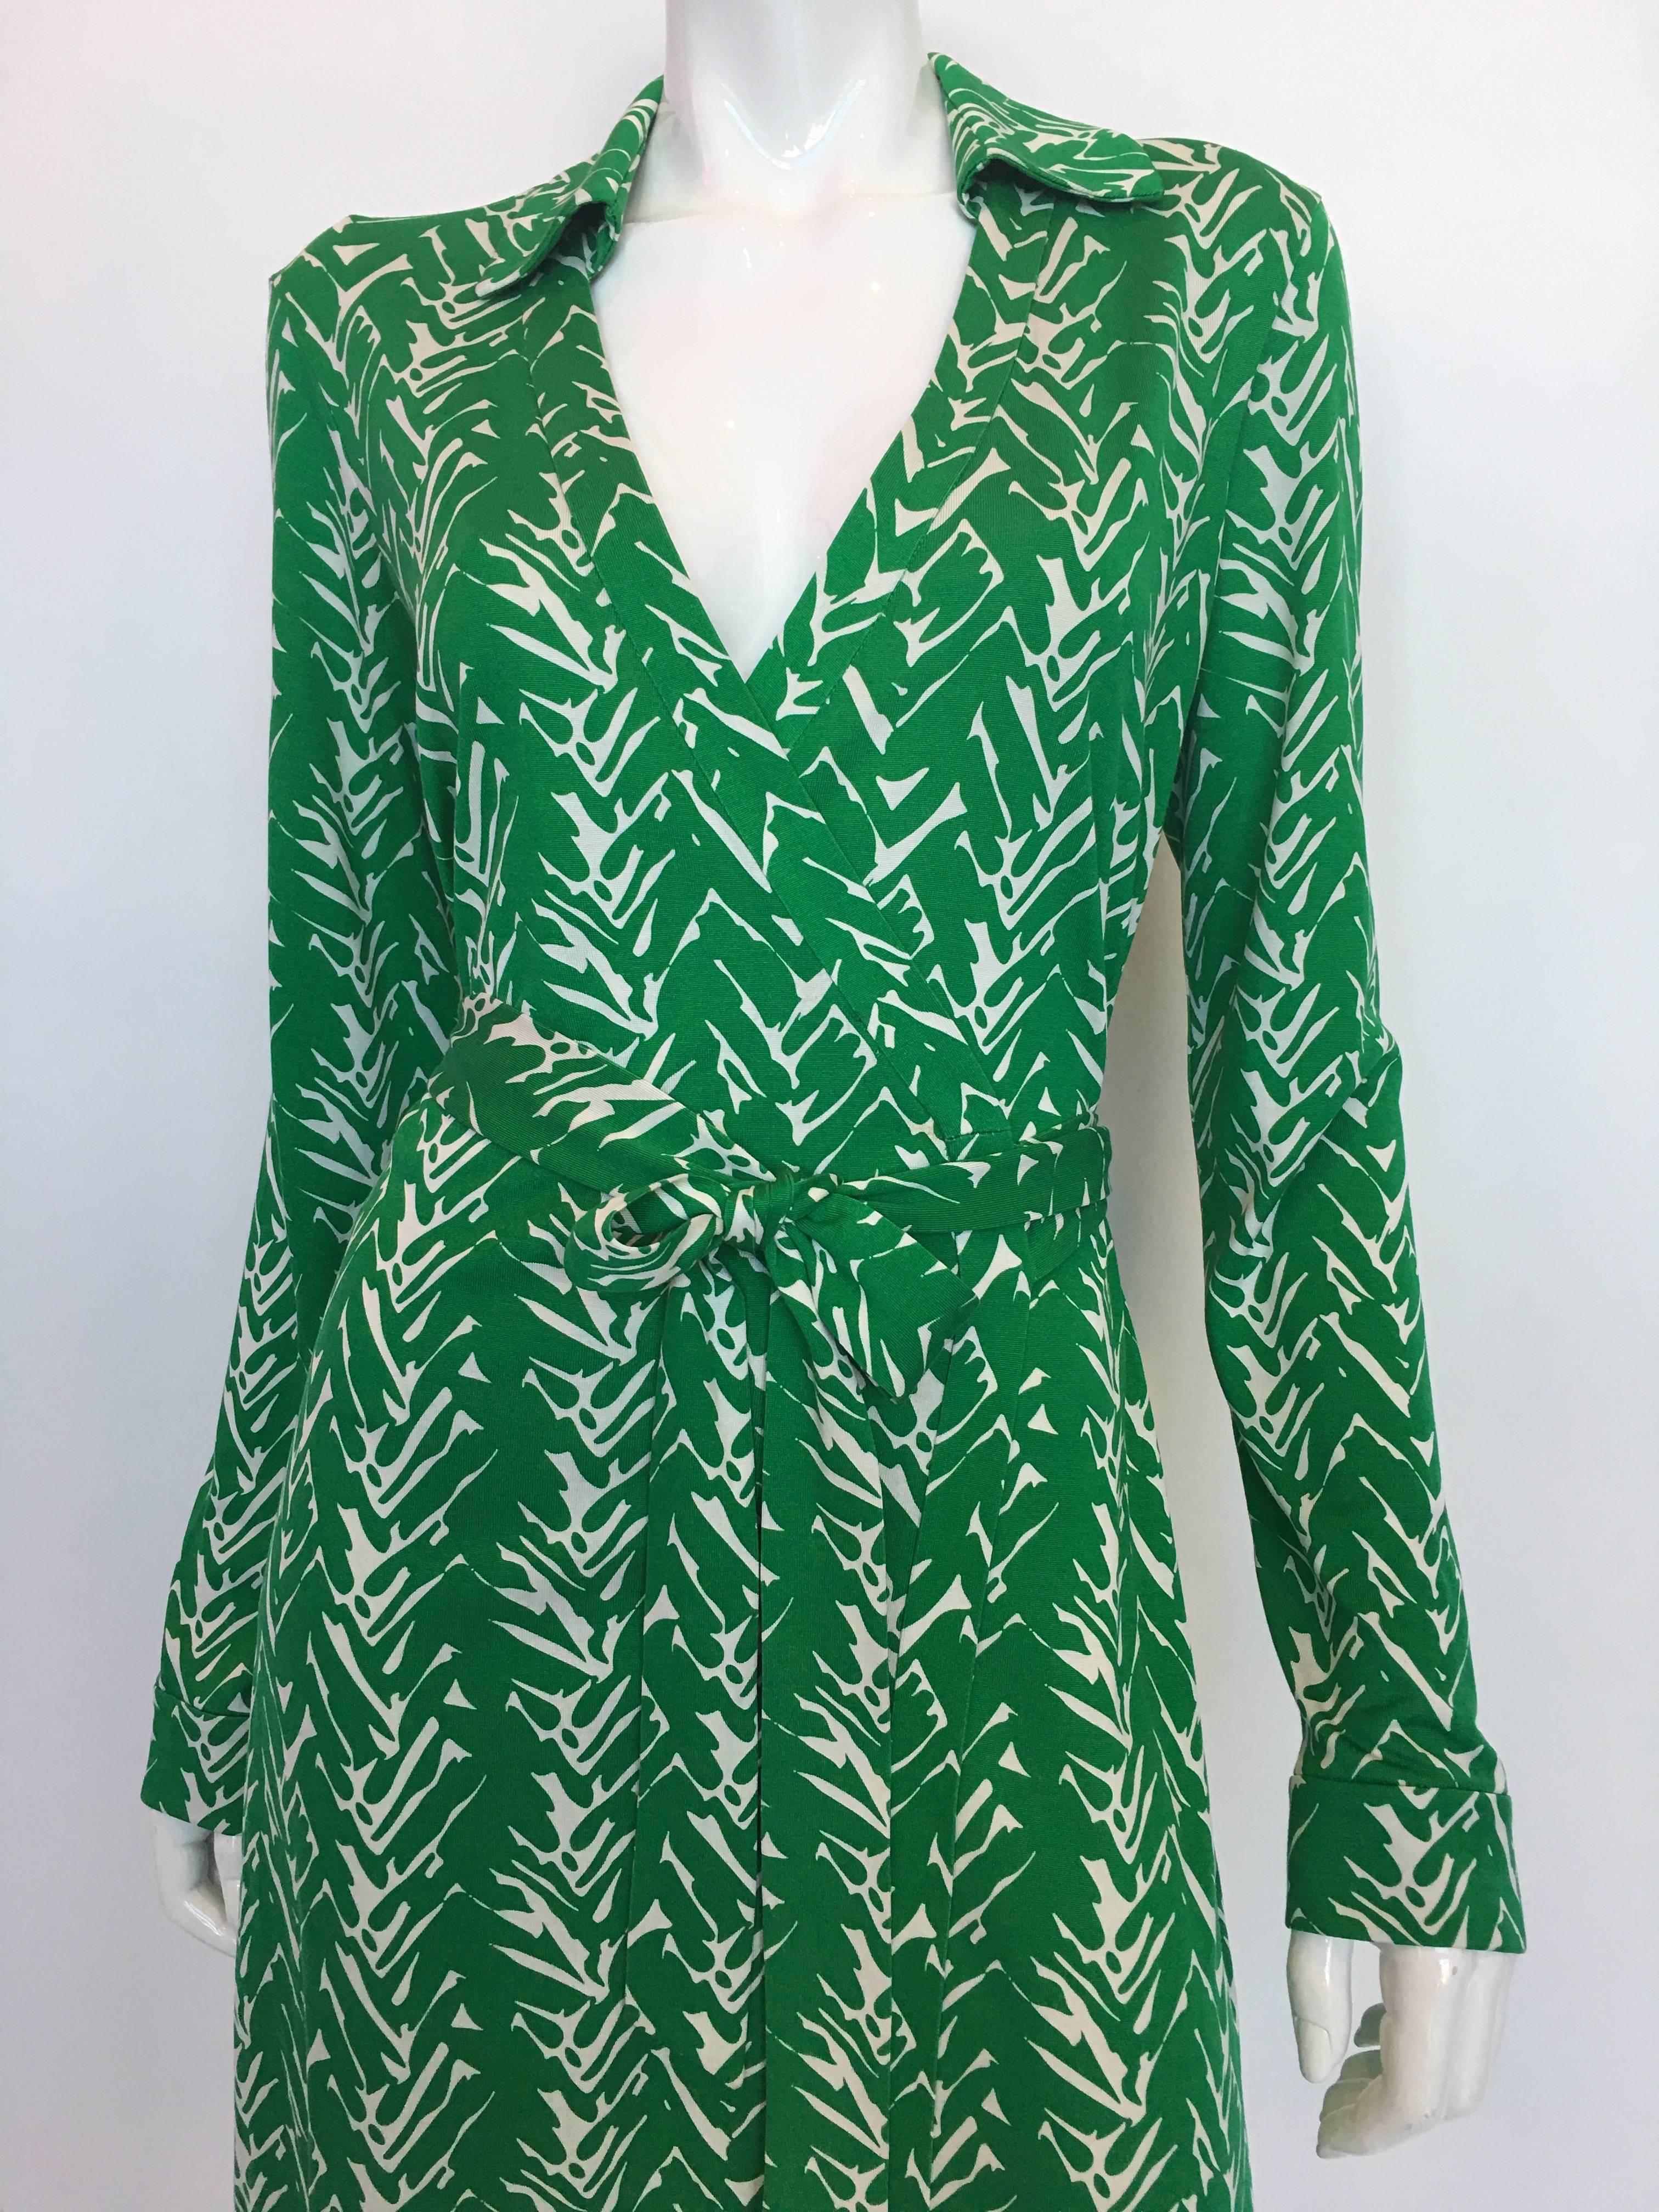 Diane von Furstenberg Green Print Classic Wrap Dress

Size Label 12

All measurements taken flat:
Shoulders: 16"
Armpit to armpit: 18.5"
Waist: 16"
Sleeve length: 25.5"
Length - Front (V neck to bottom hem): 32.5"
          